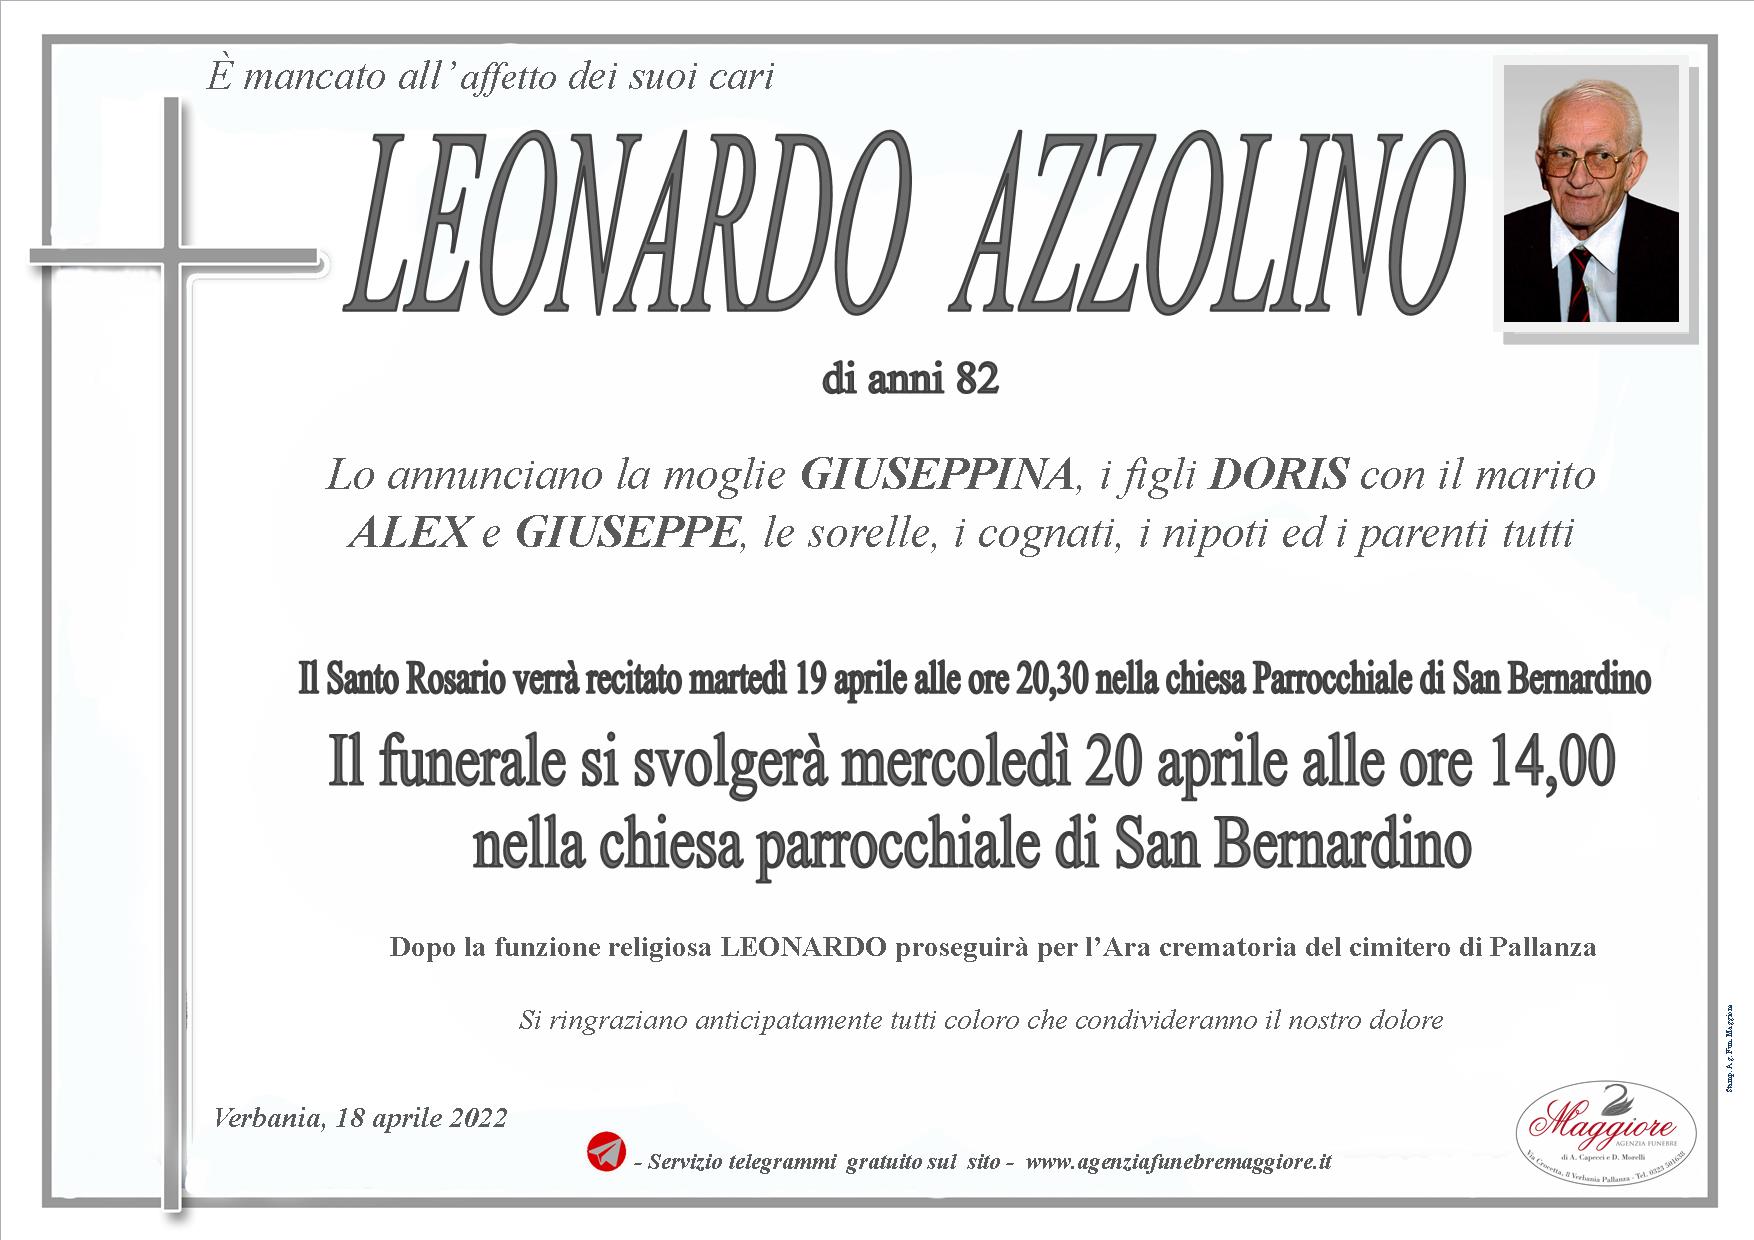 Leonardo Azzolino